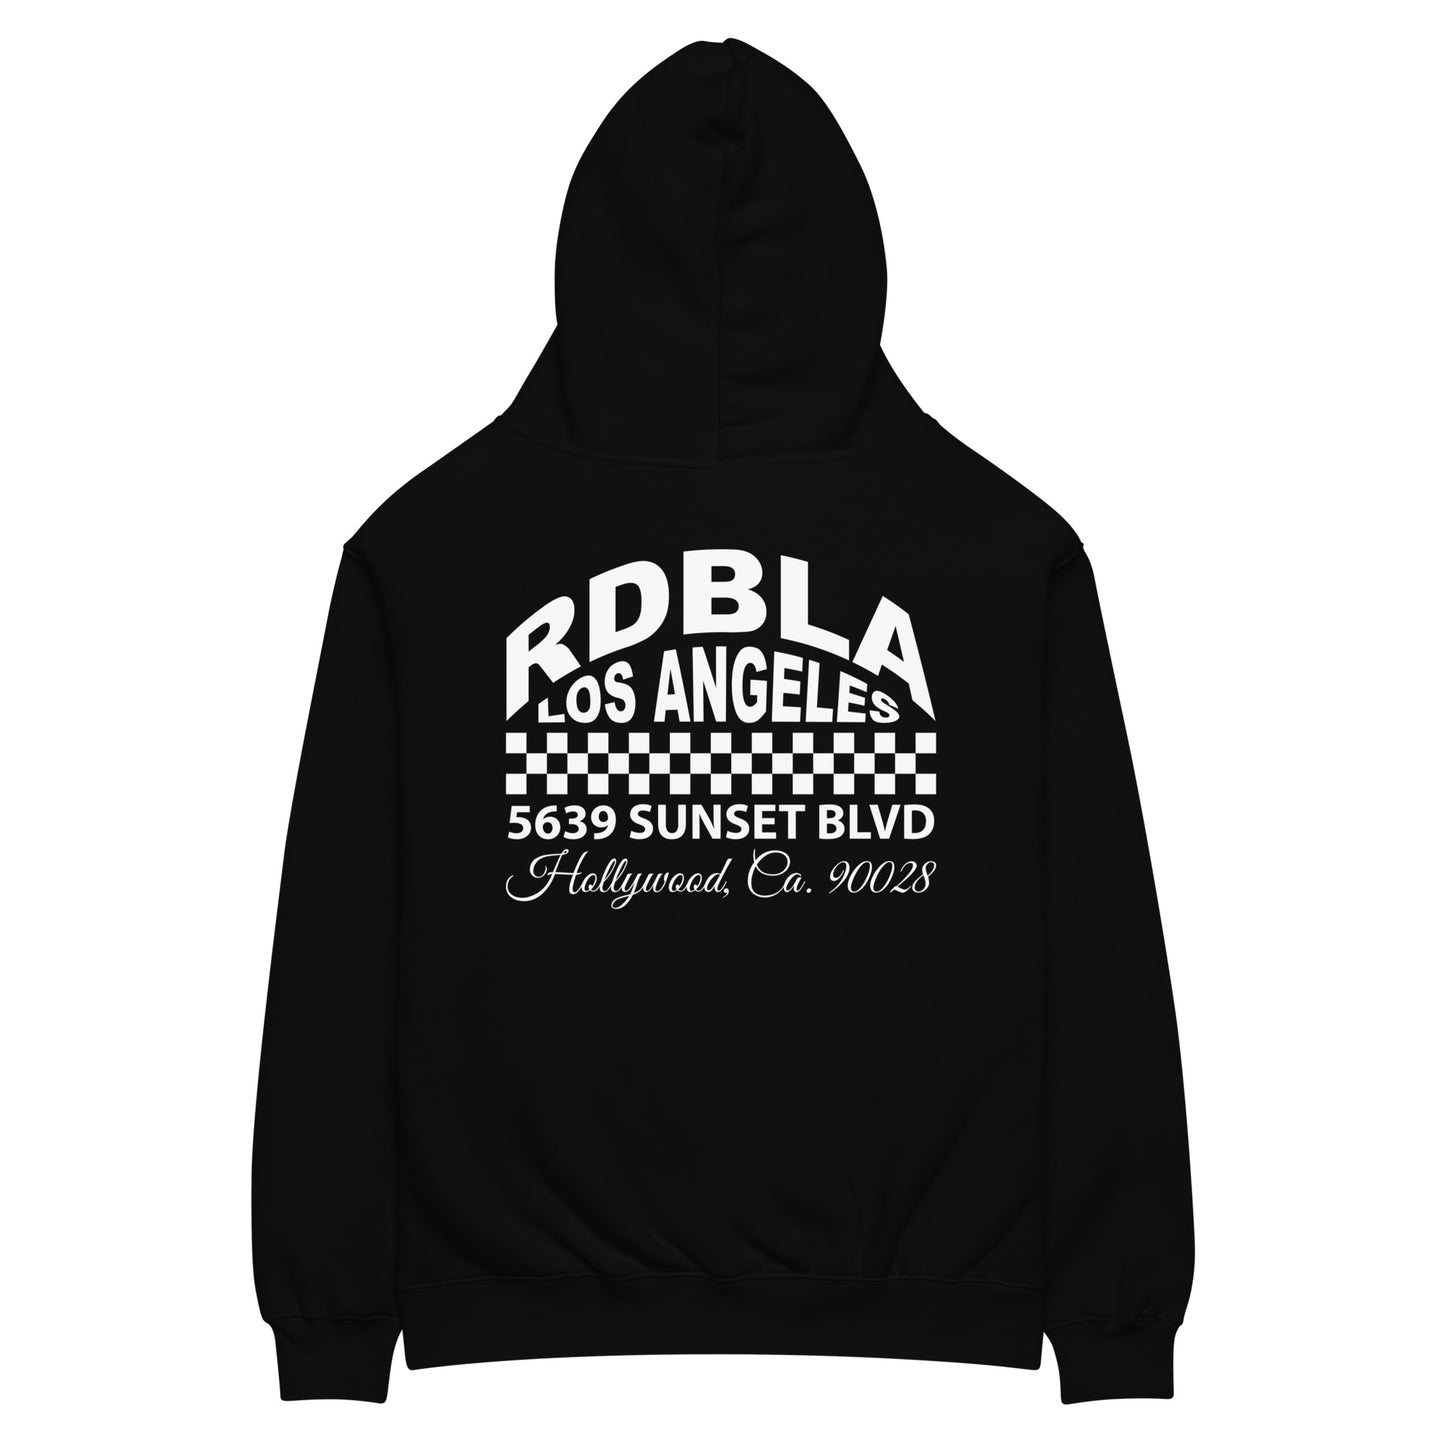 RDBLA Basics - Sunset Blvd oversized hoodie